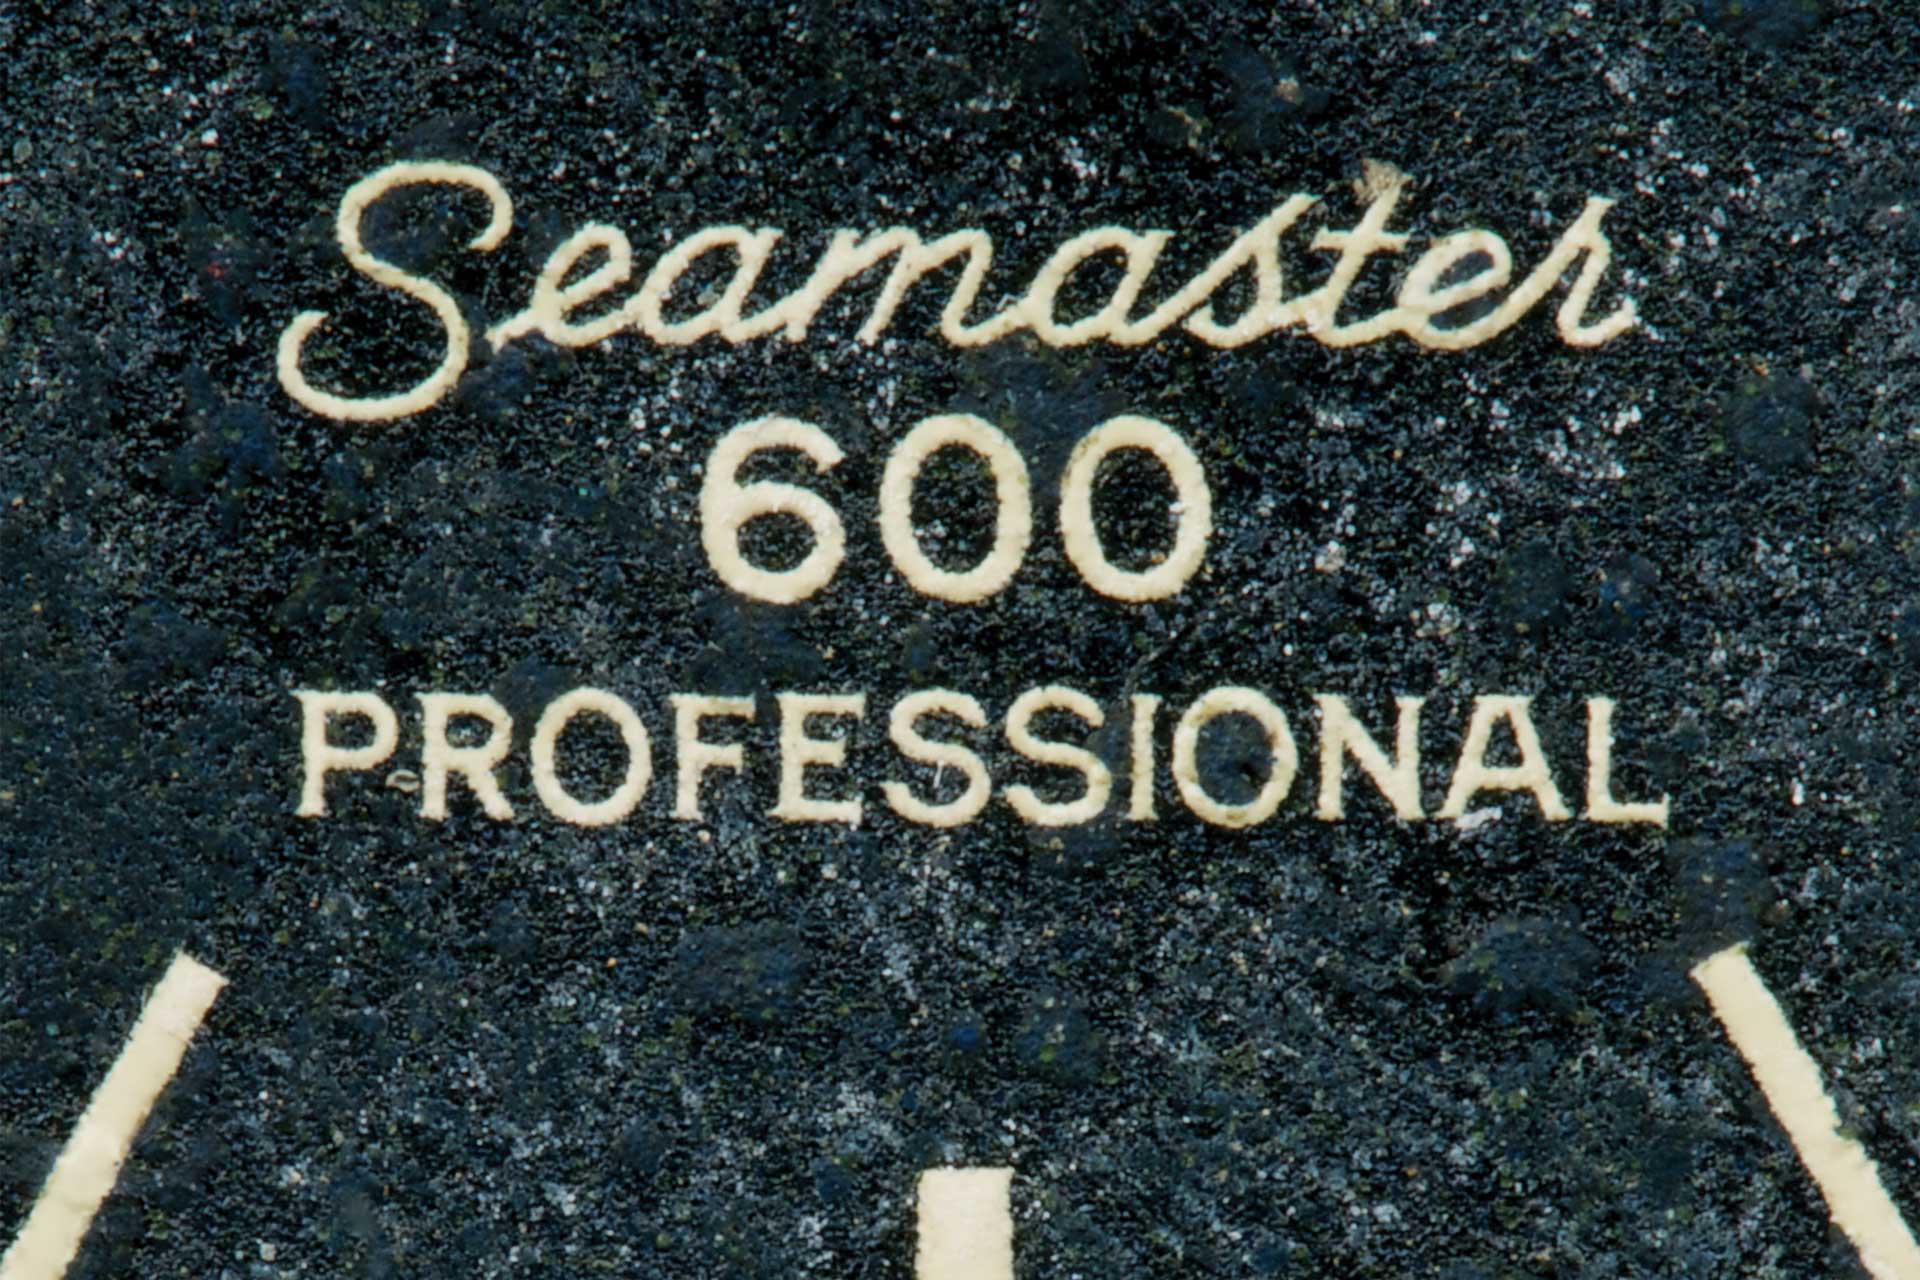 Seamaster 600 professional